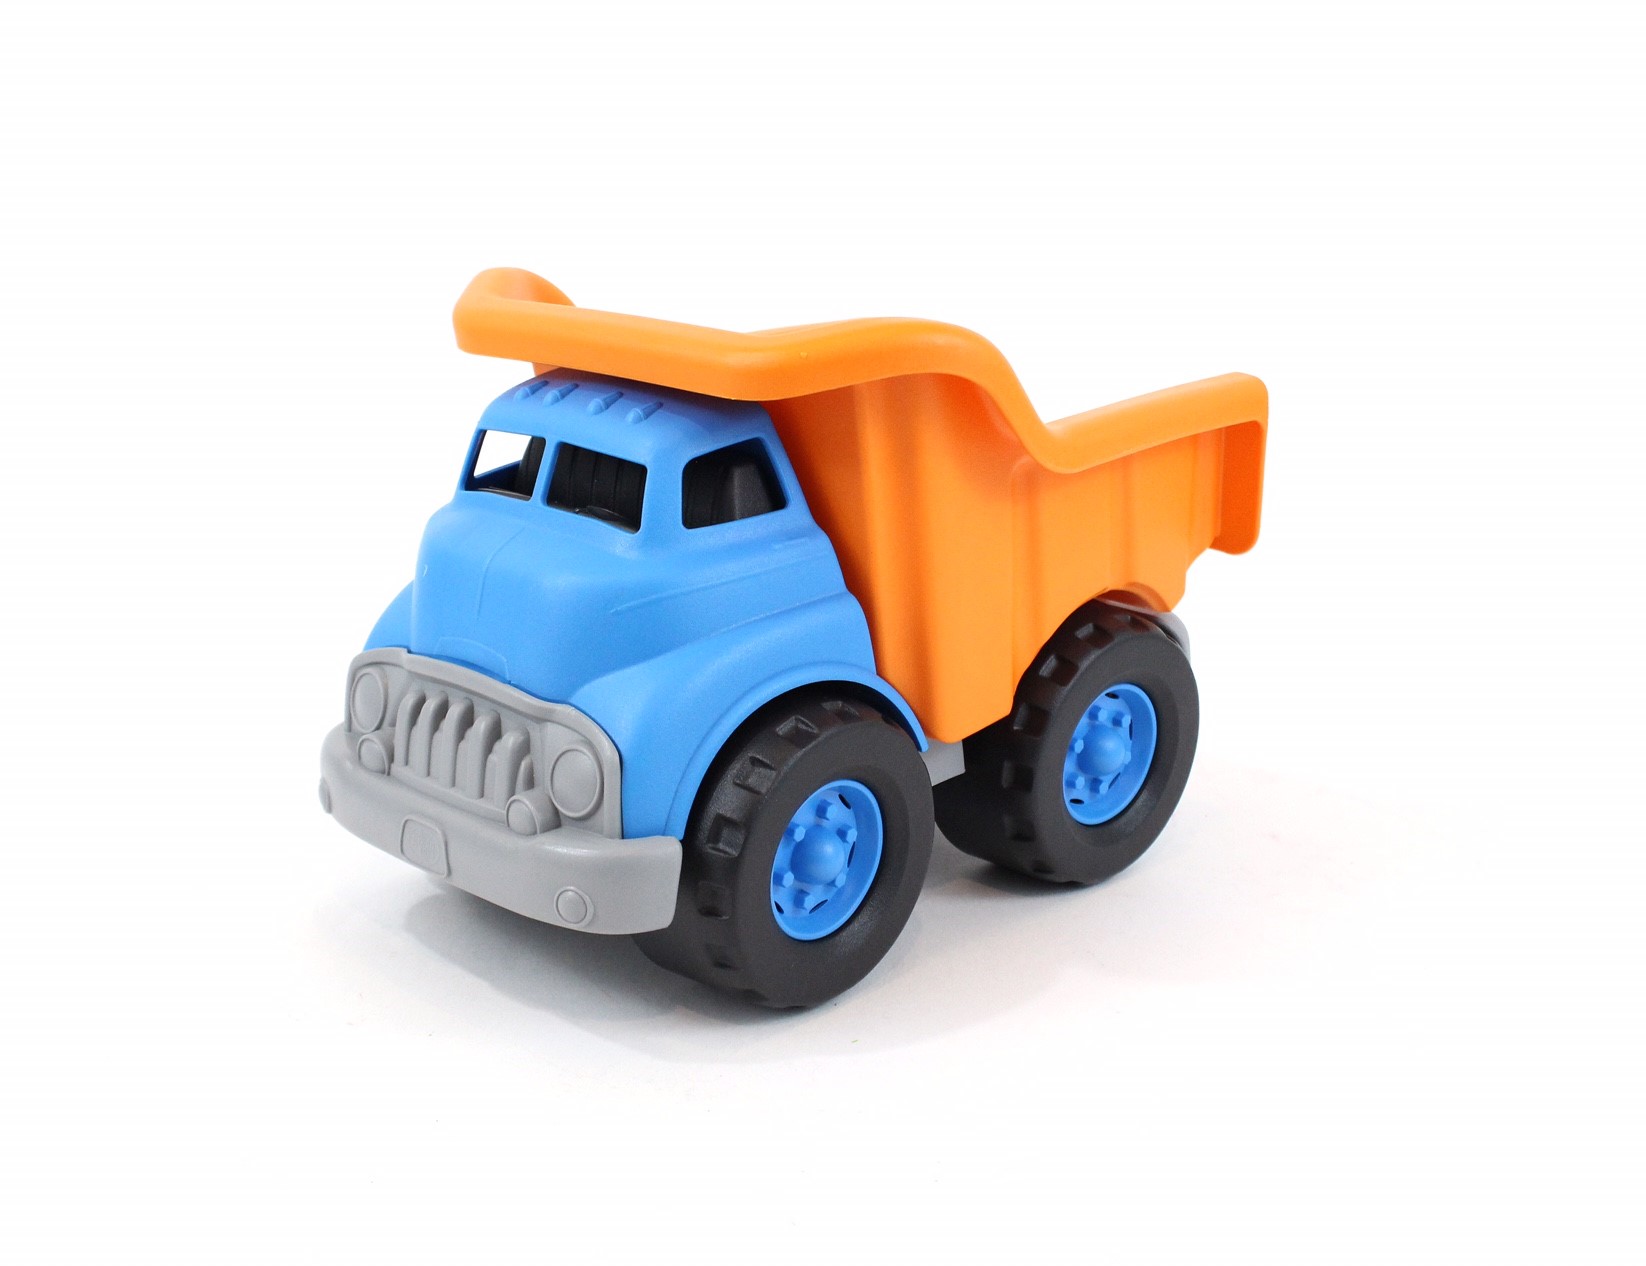 Green Toys Dumper Vehicle